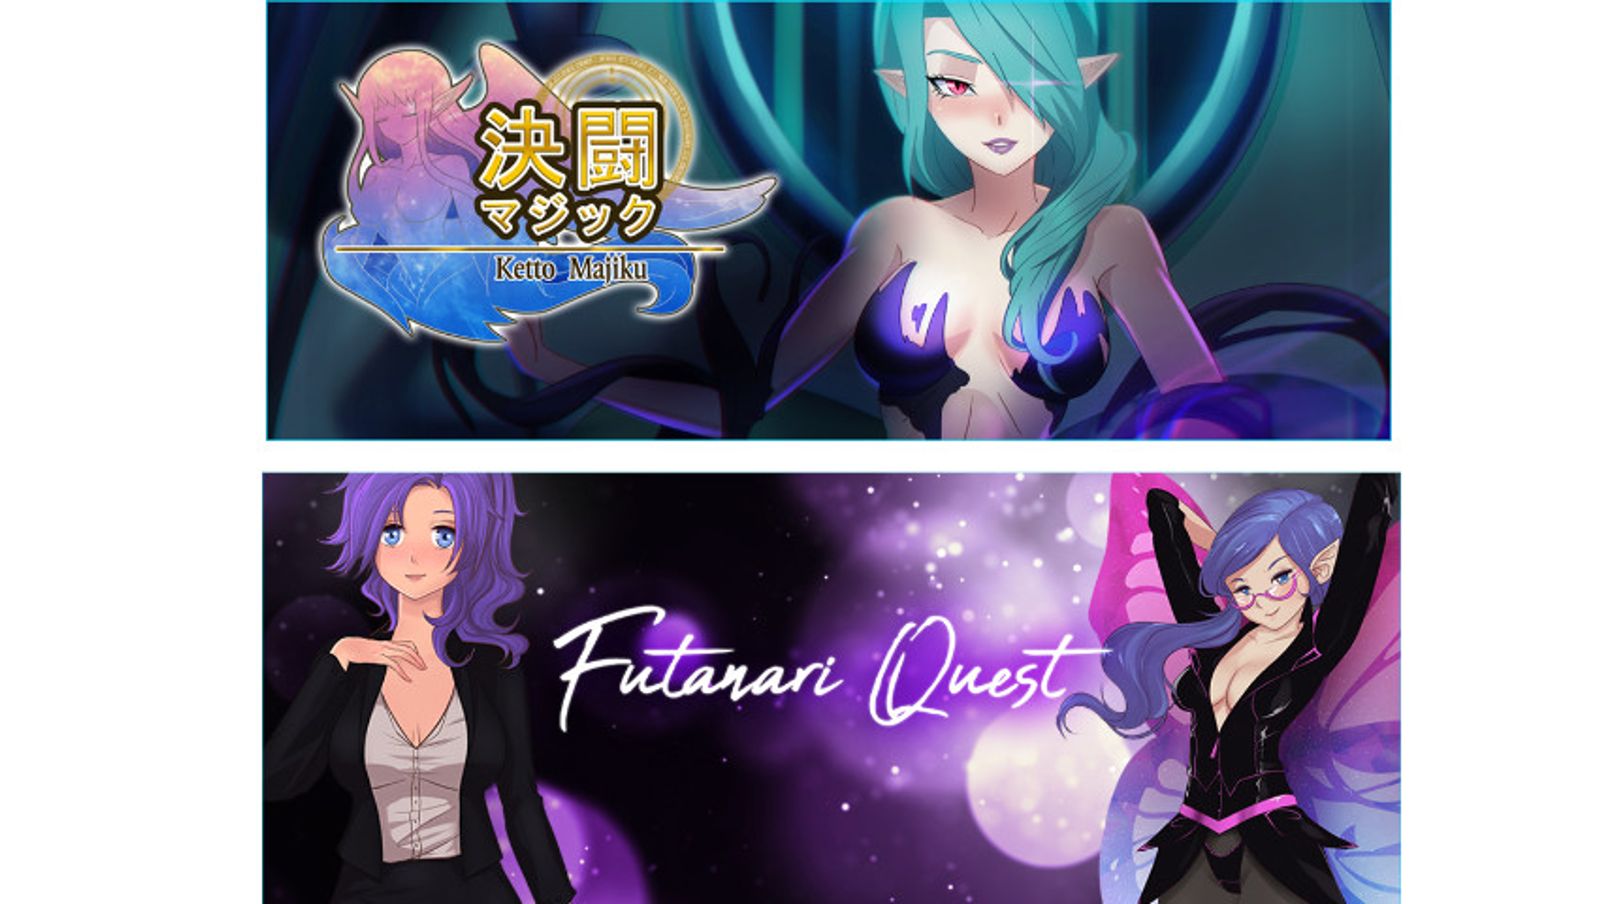 Nutaku Announces New Games: 'Ketto Majiku,' 'Futanari Quest'